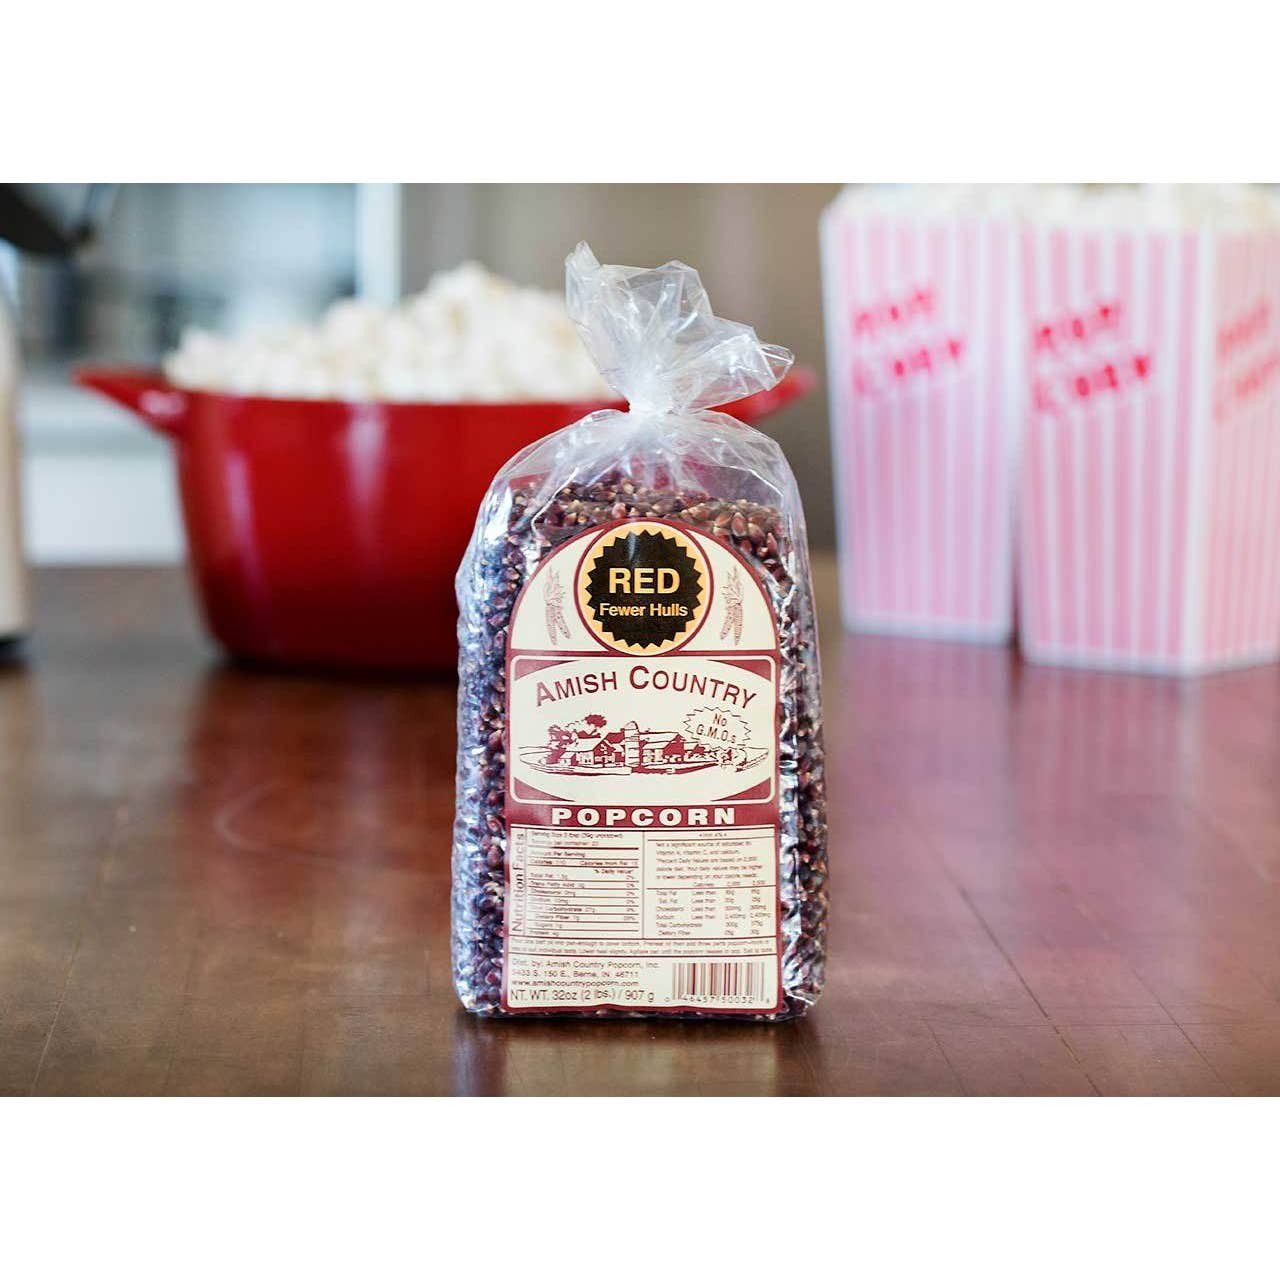 Amish Poper With Popcorn Gift Set